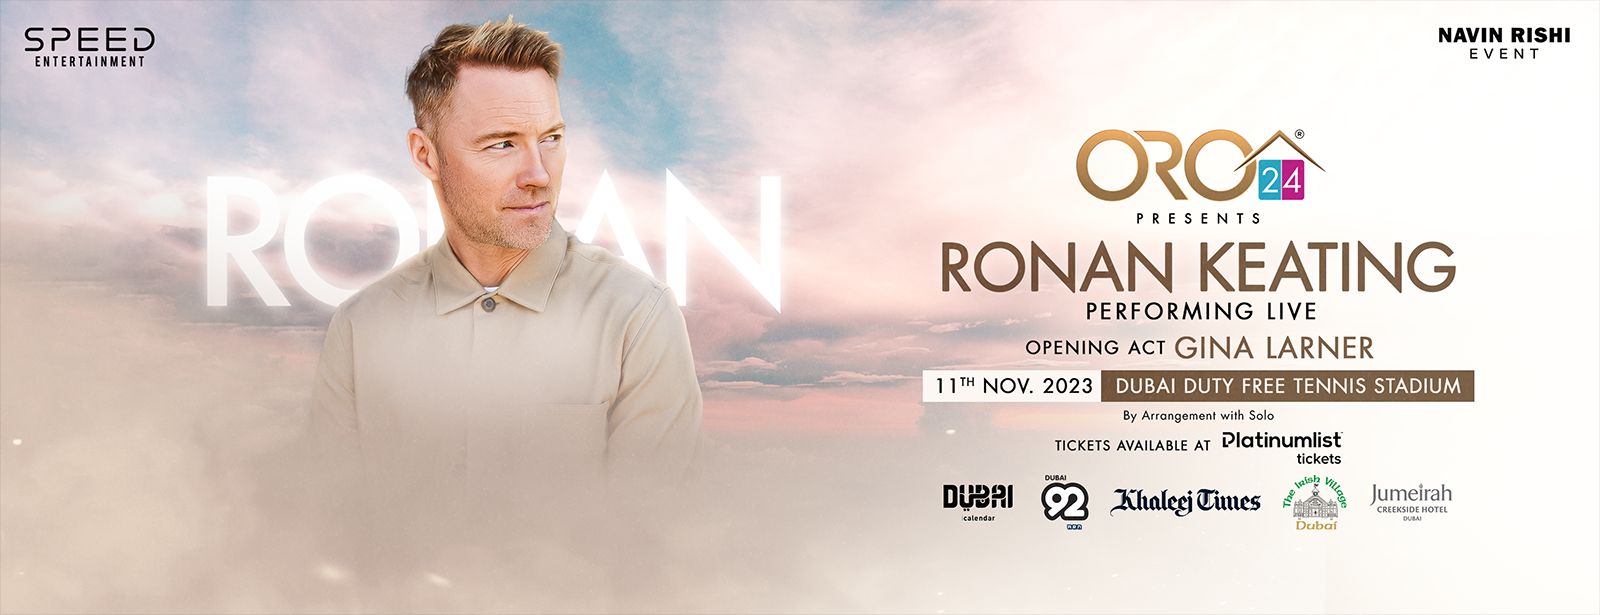 Speed Entertainment presents: Ronan Keating Live Concert in Dubai - Coming Soon in UAE